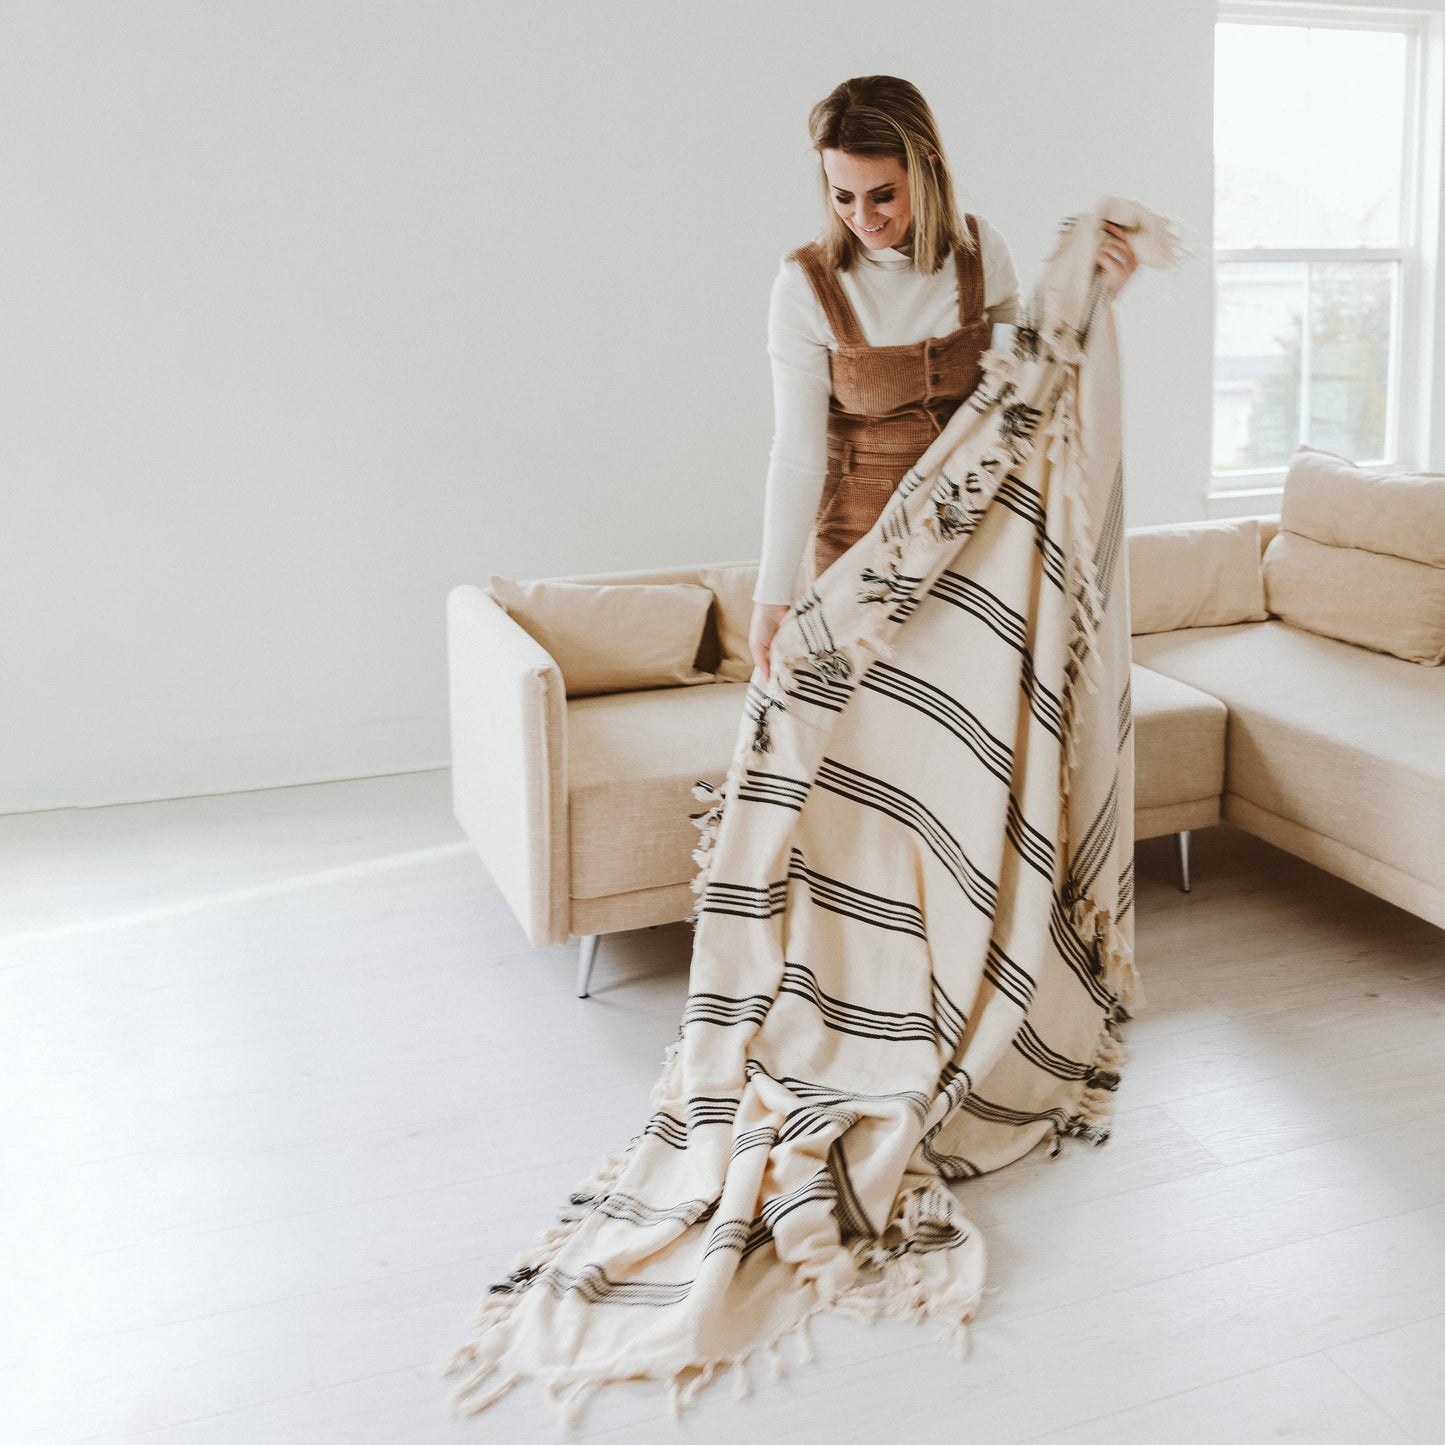 Henley Turkish Cotton Throw Blanket - Home Decor & Gifts